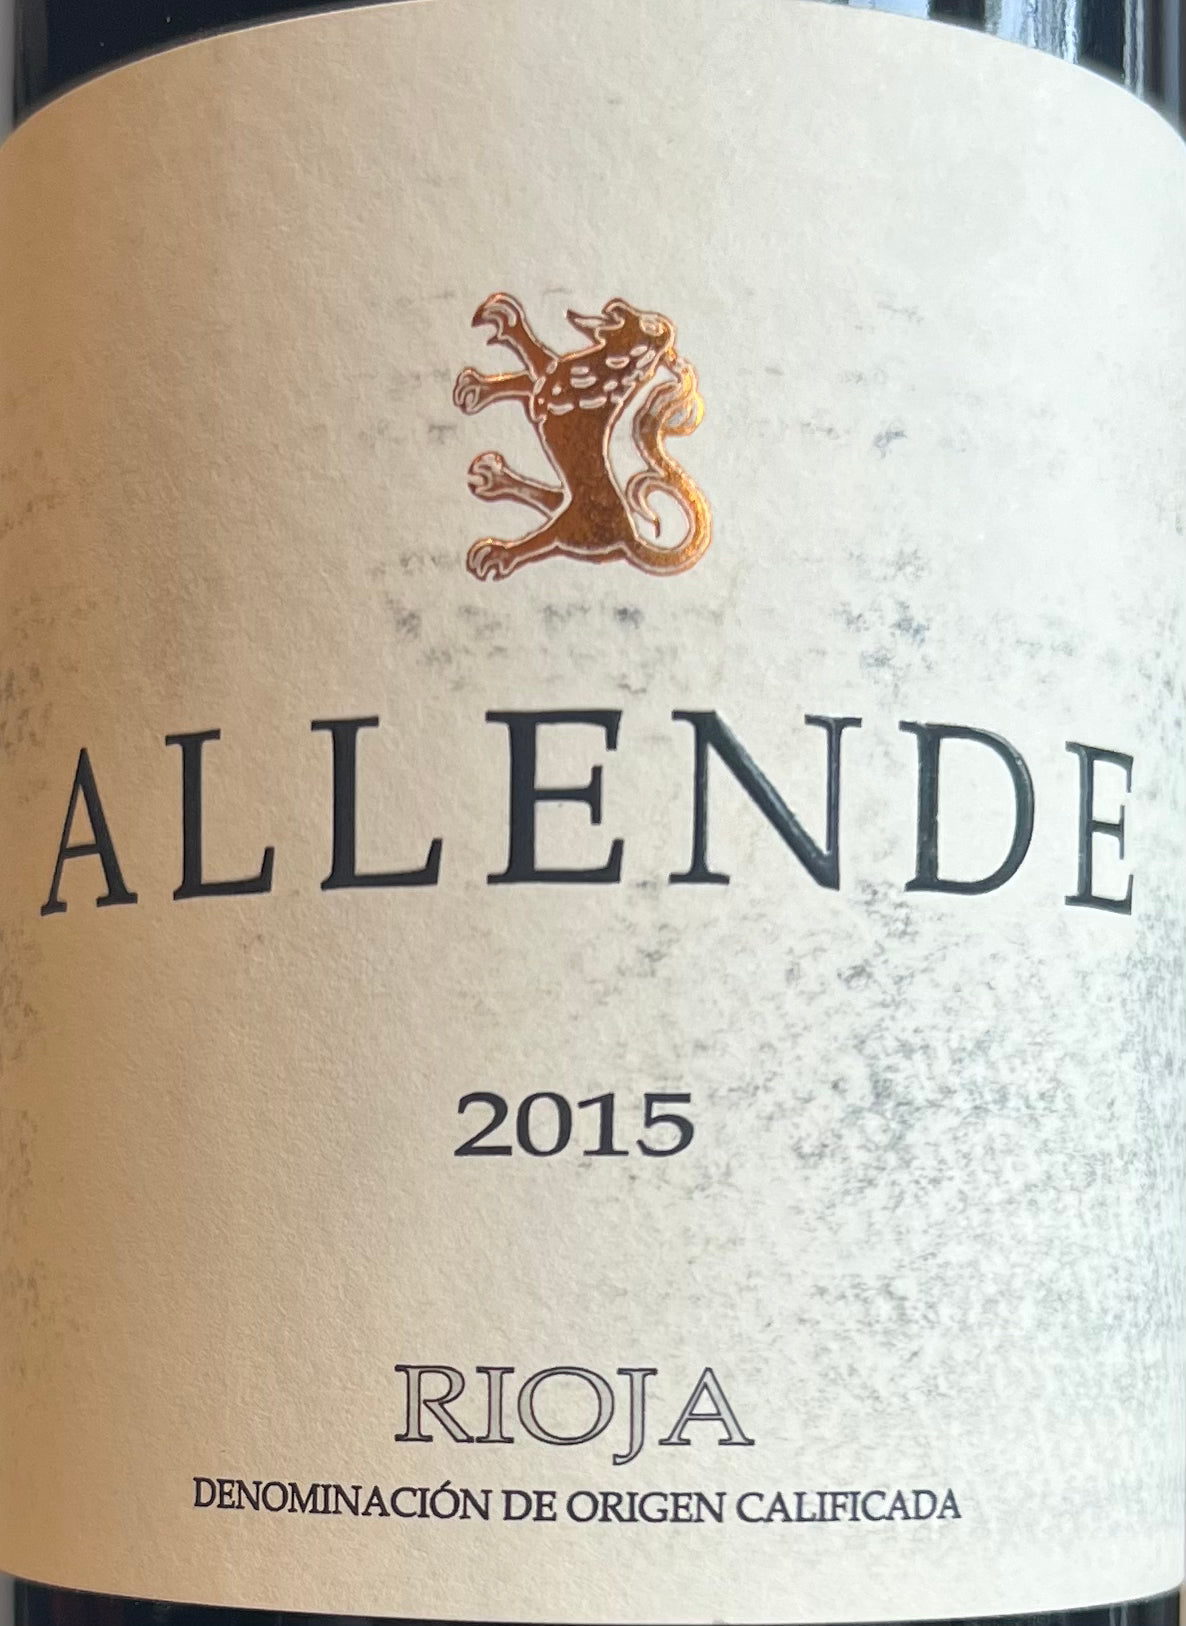 Allende - Rioja